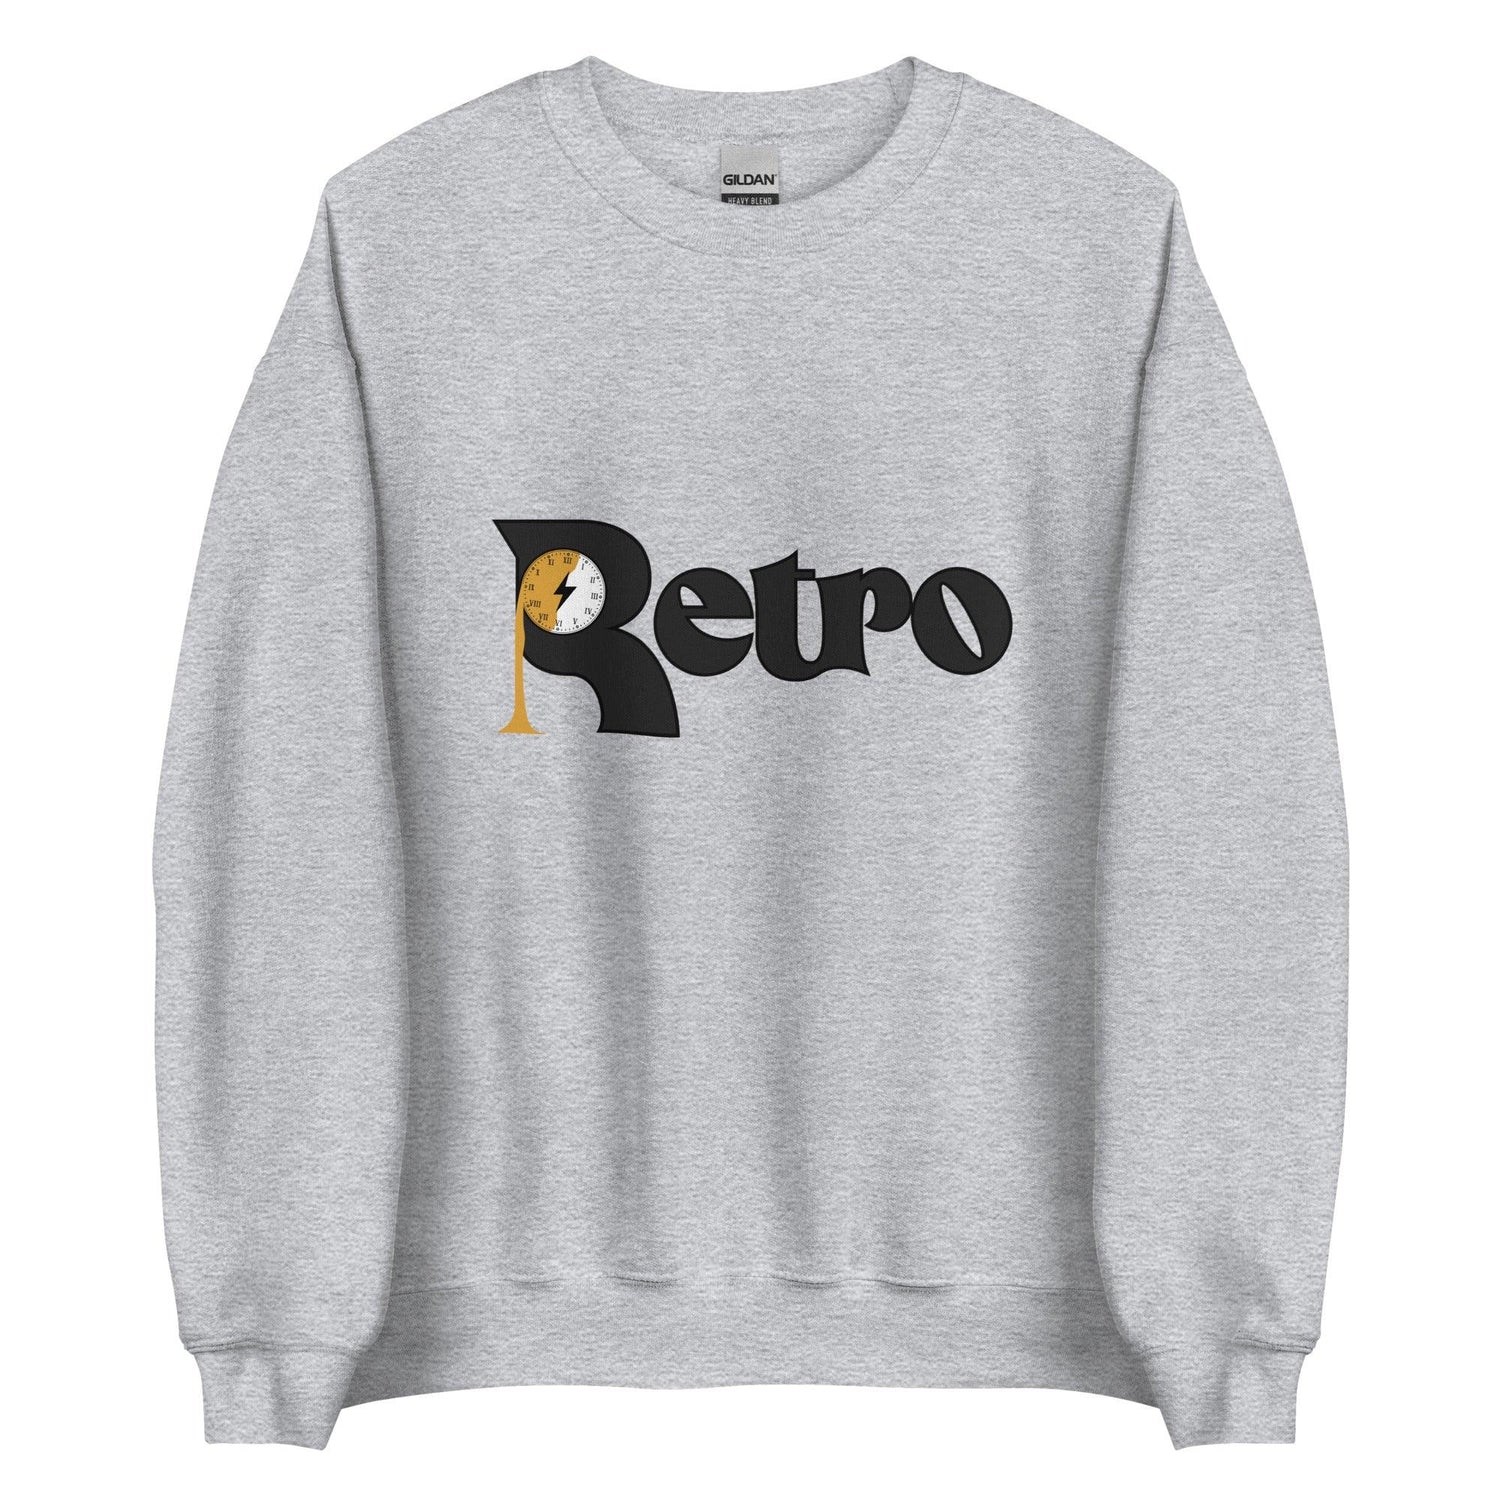 Joshua Roberts "Retro" Sweatshirt - Fan Arch